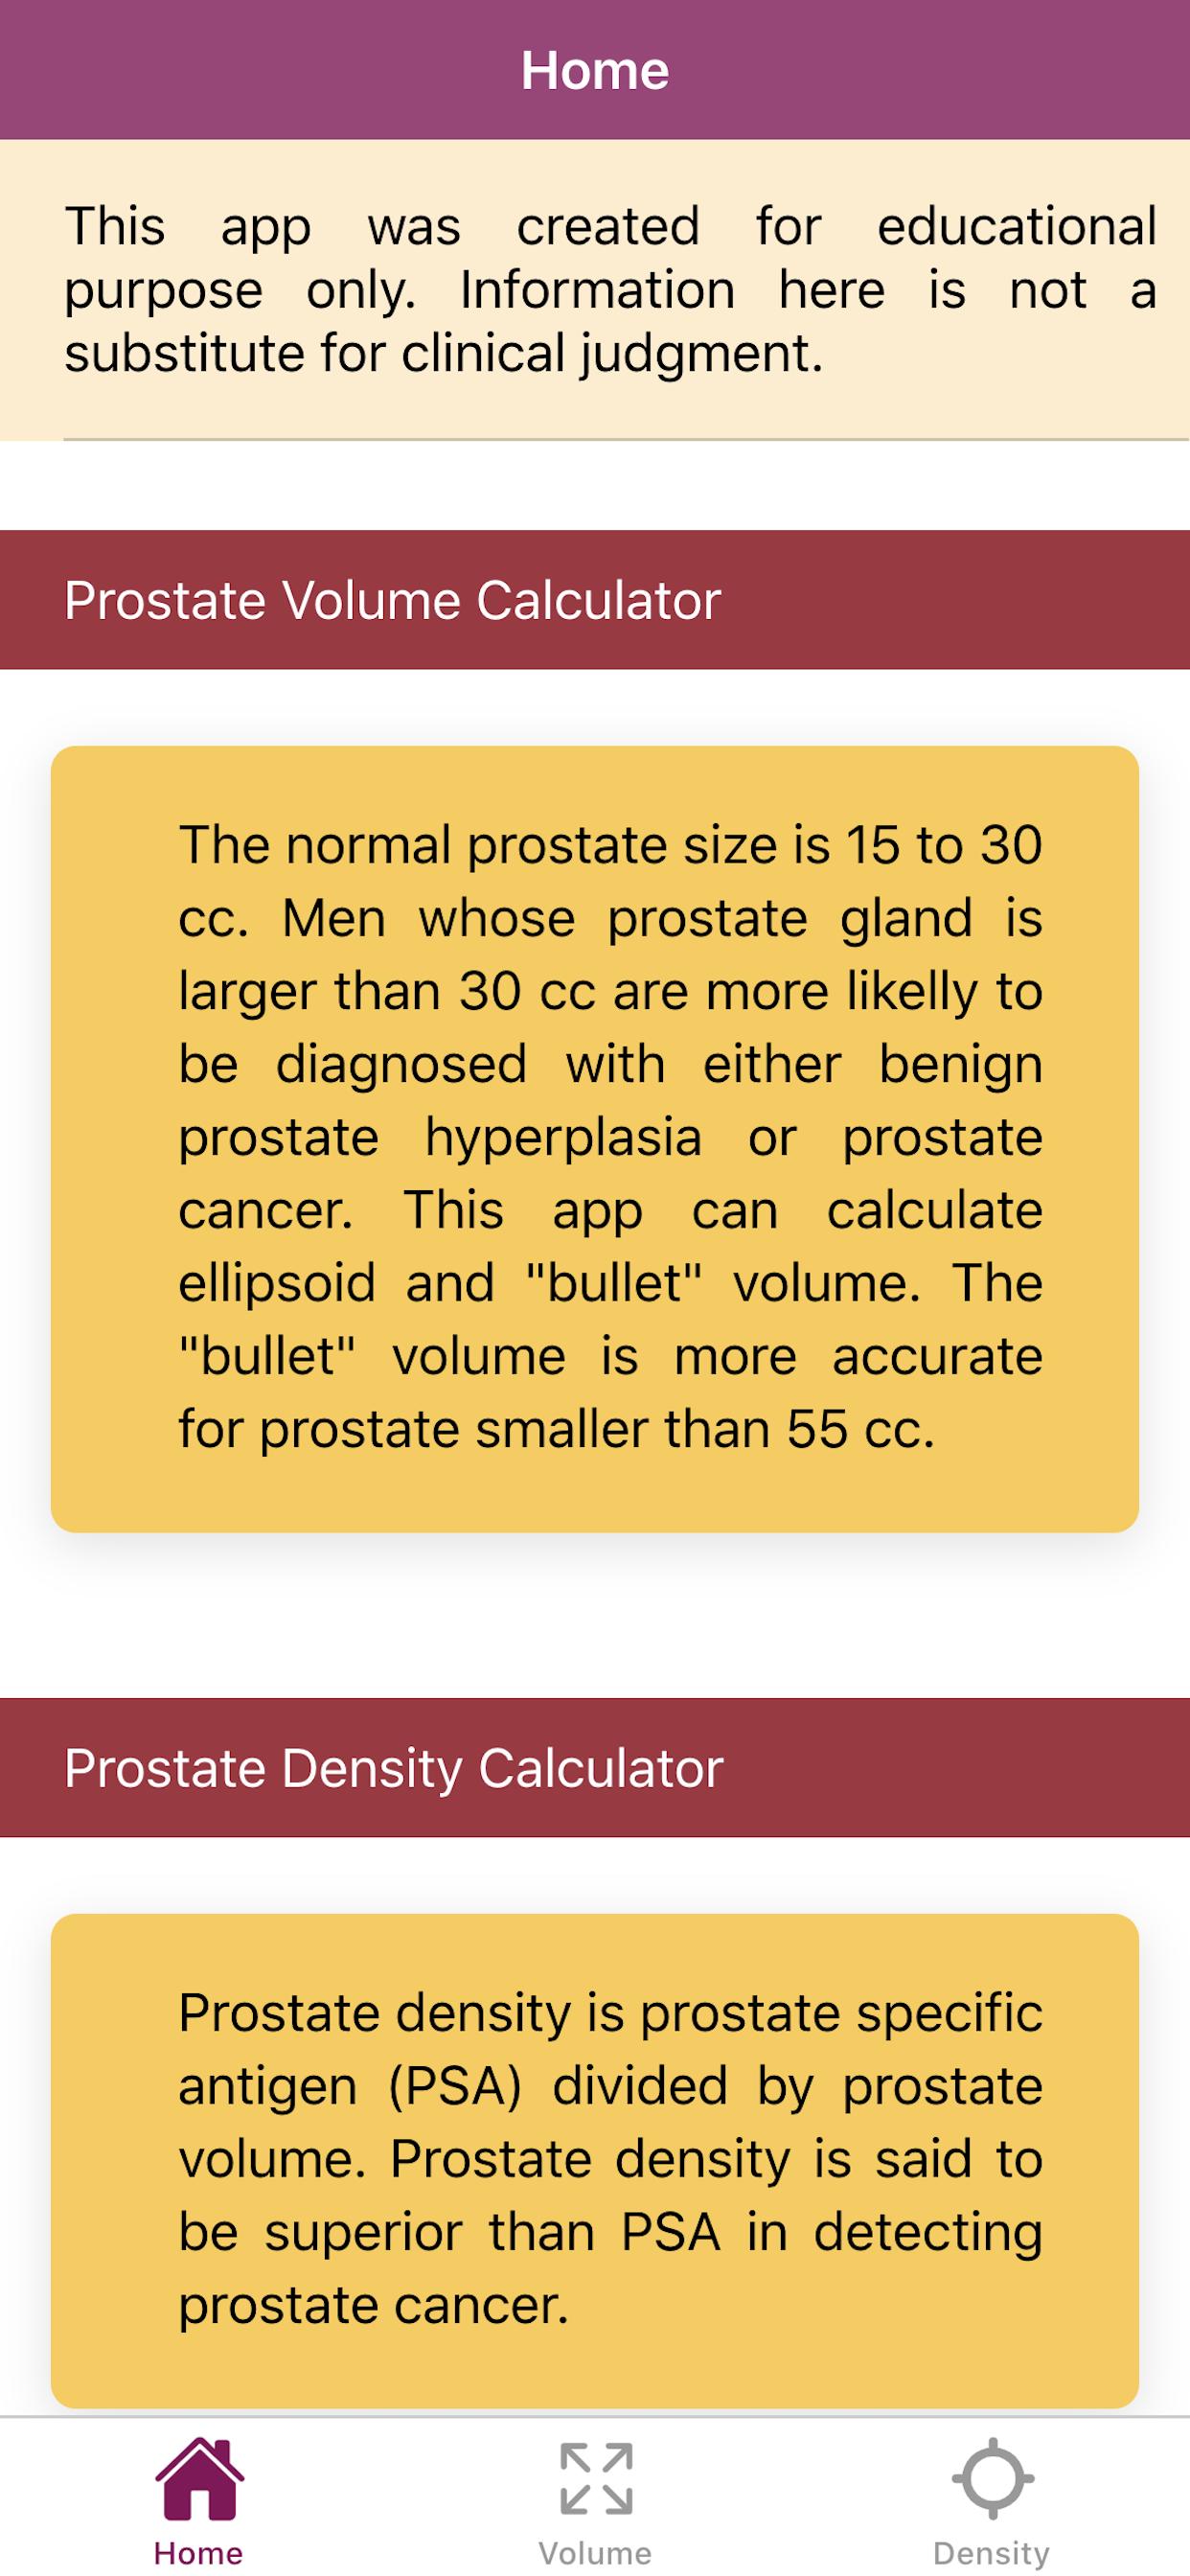 prostate volume calculator psa density